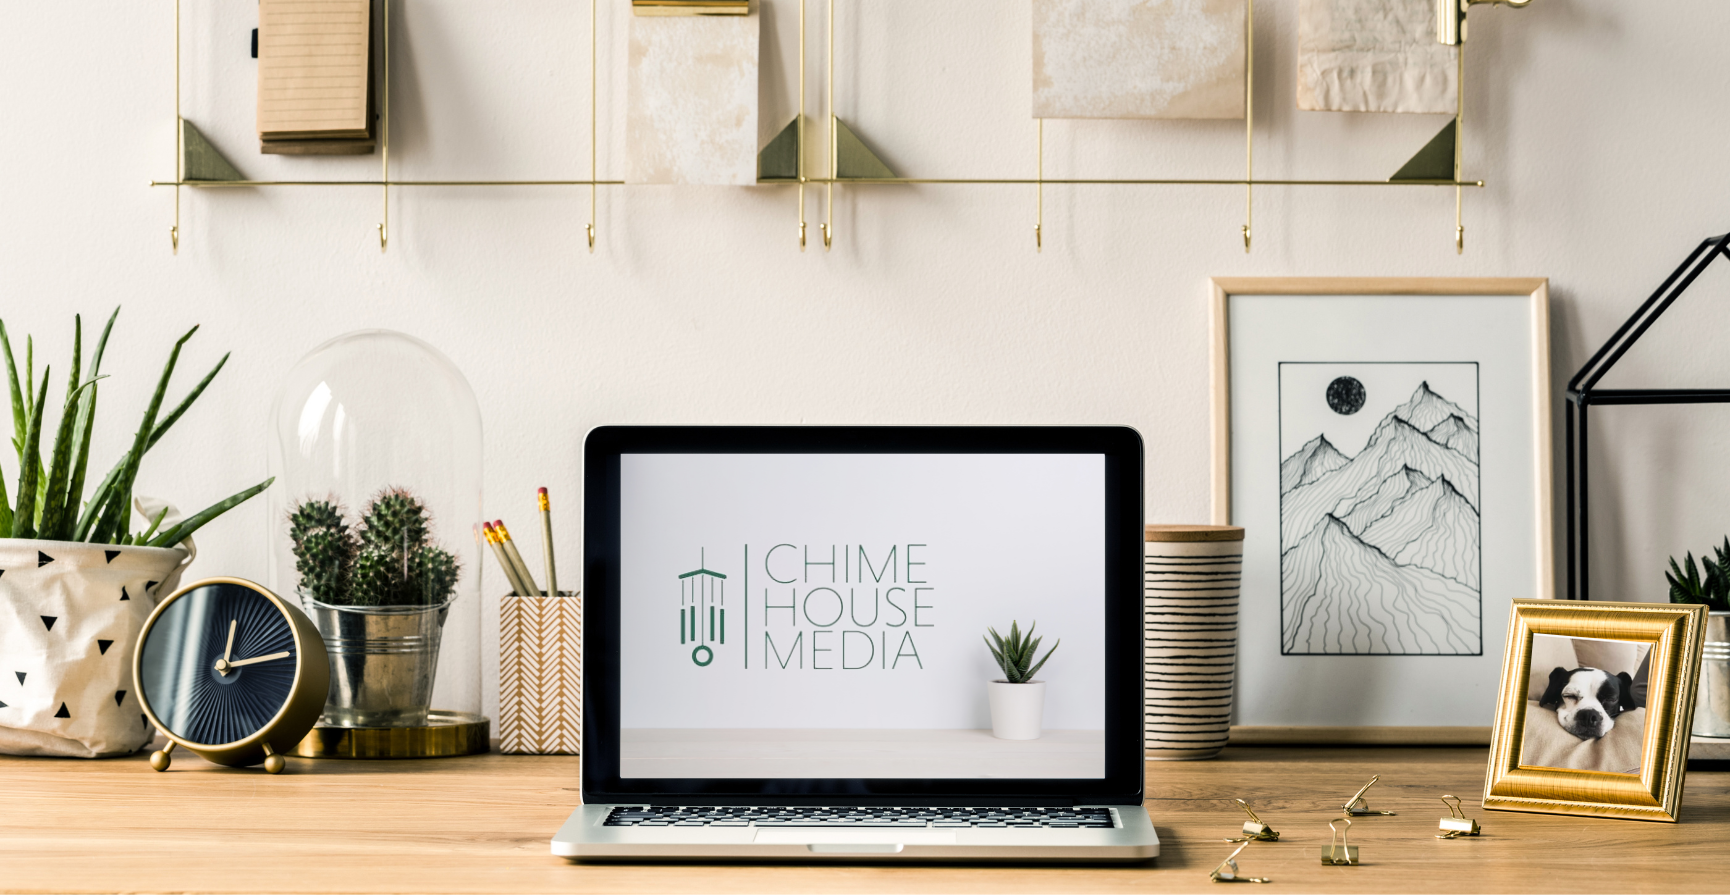 Chime House Media